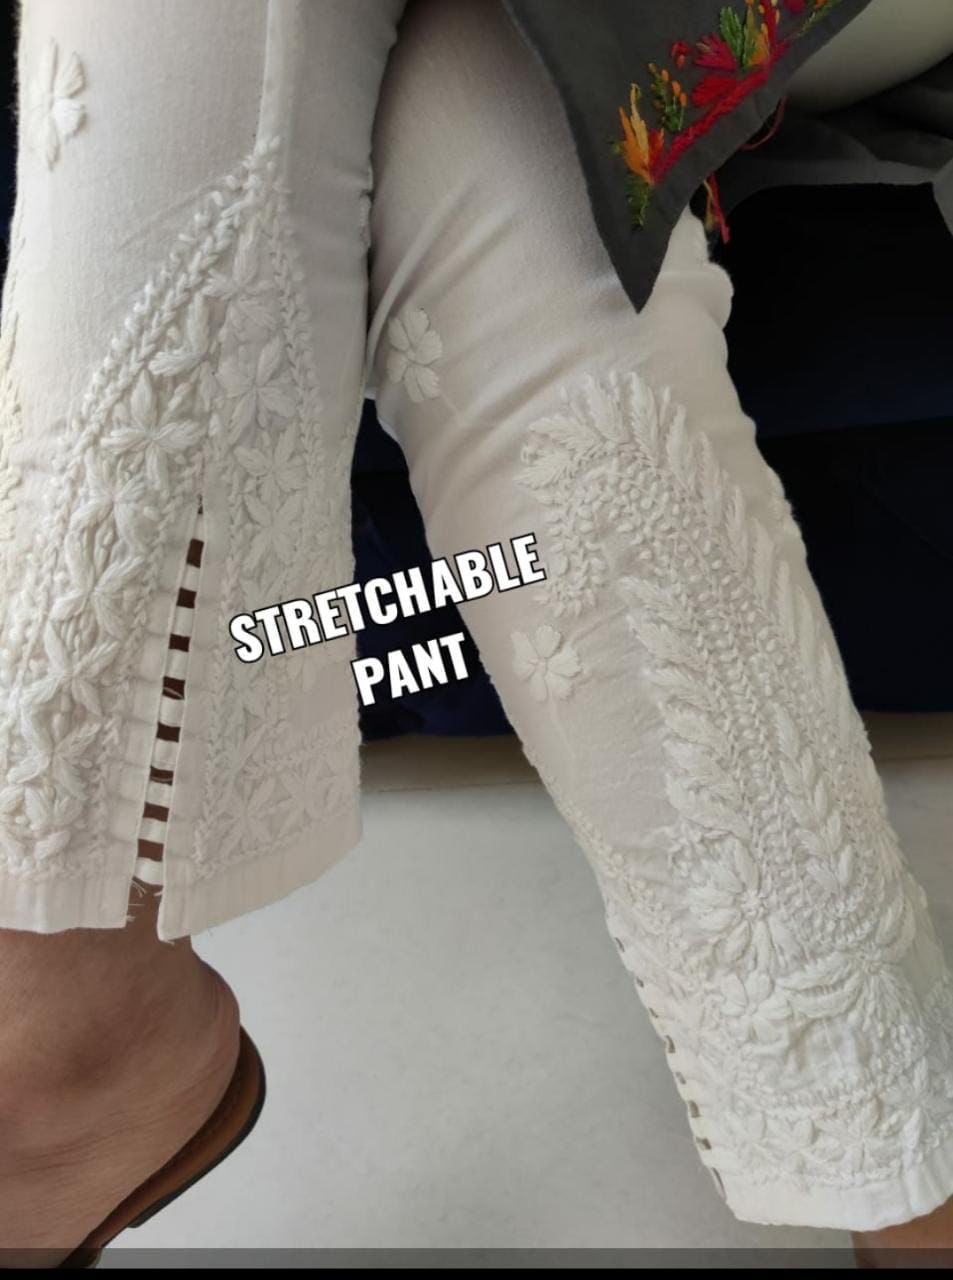 White Stitched Ladies Cotton Kurti Pant Set, Size : M, Xl, Pattern :  Printed at Rs 999 / Dozen in Delhi